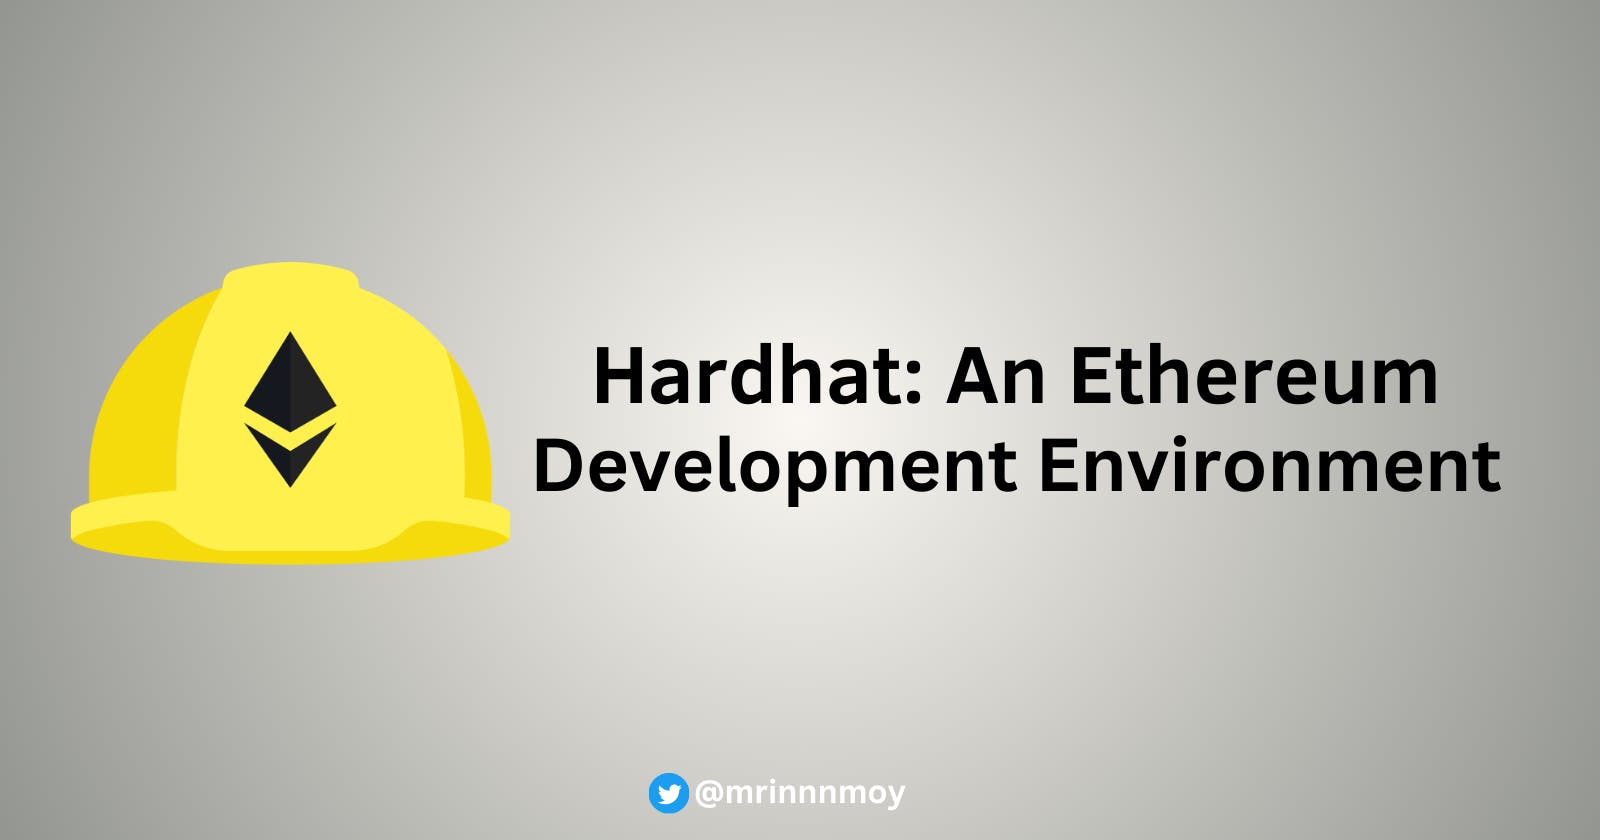 Hardhat: An Ethereum Development Environment.